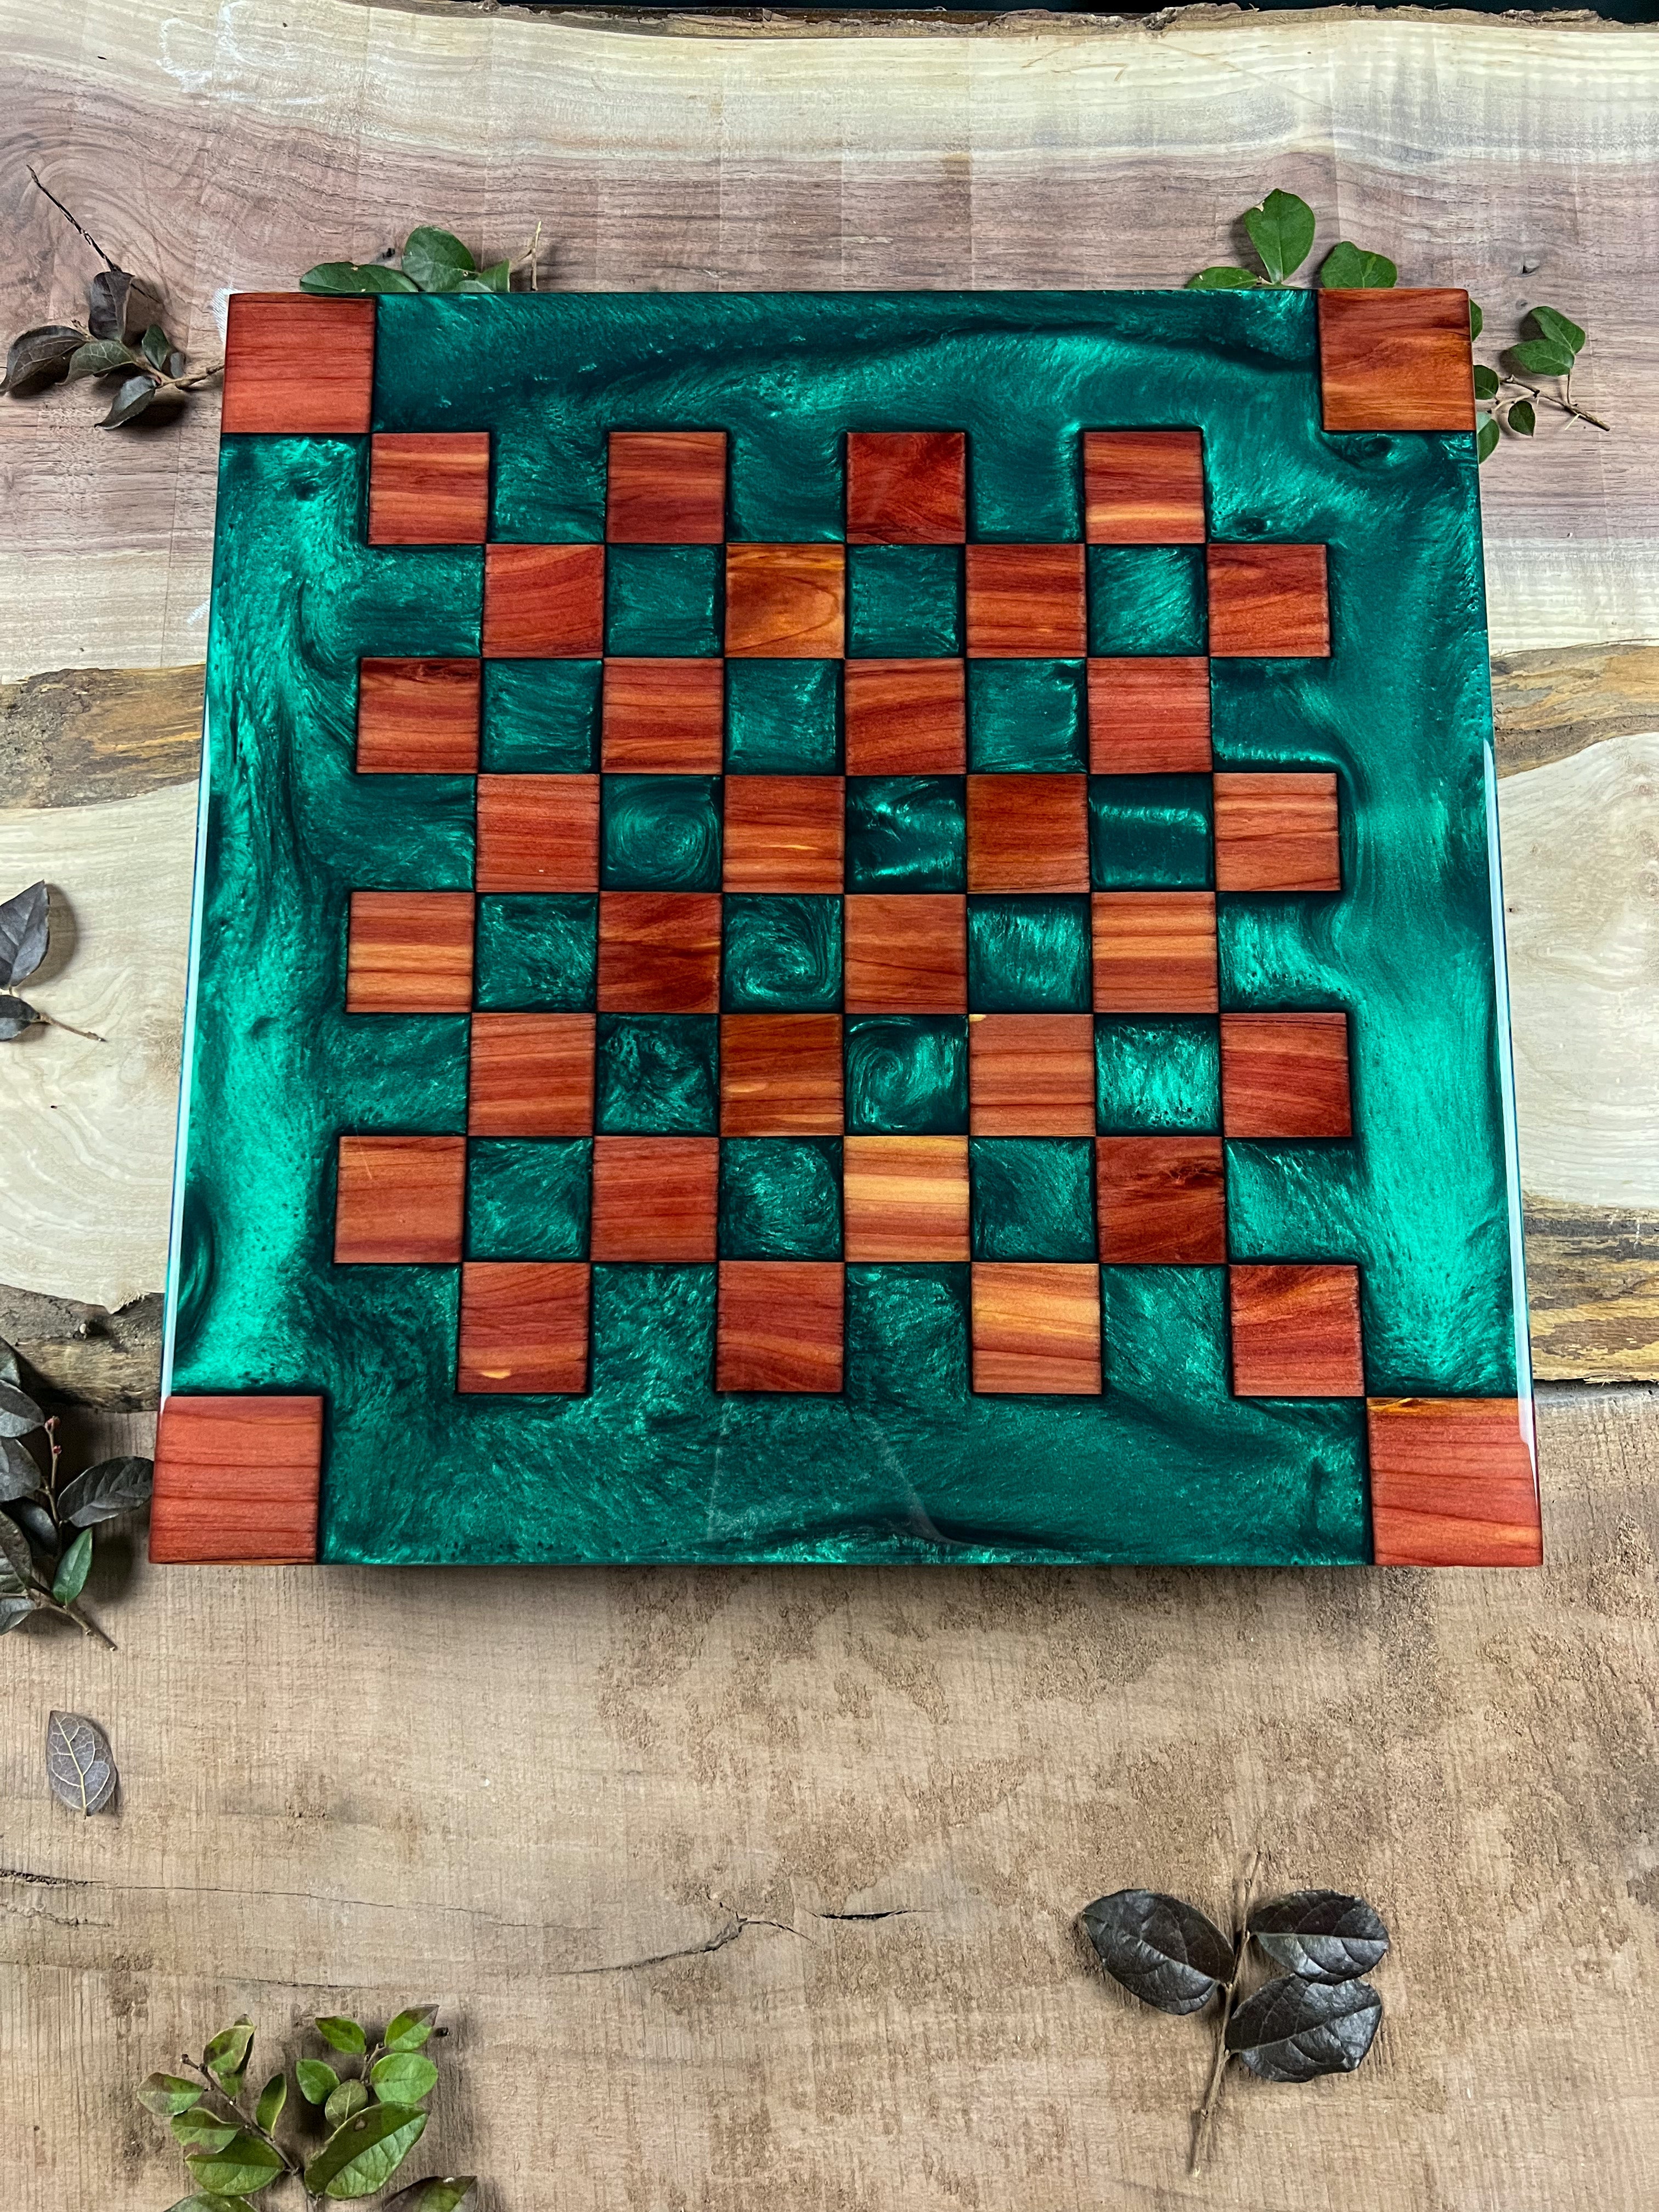 Aromatic Cedar Emerald Green Chess Board